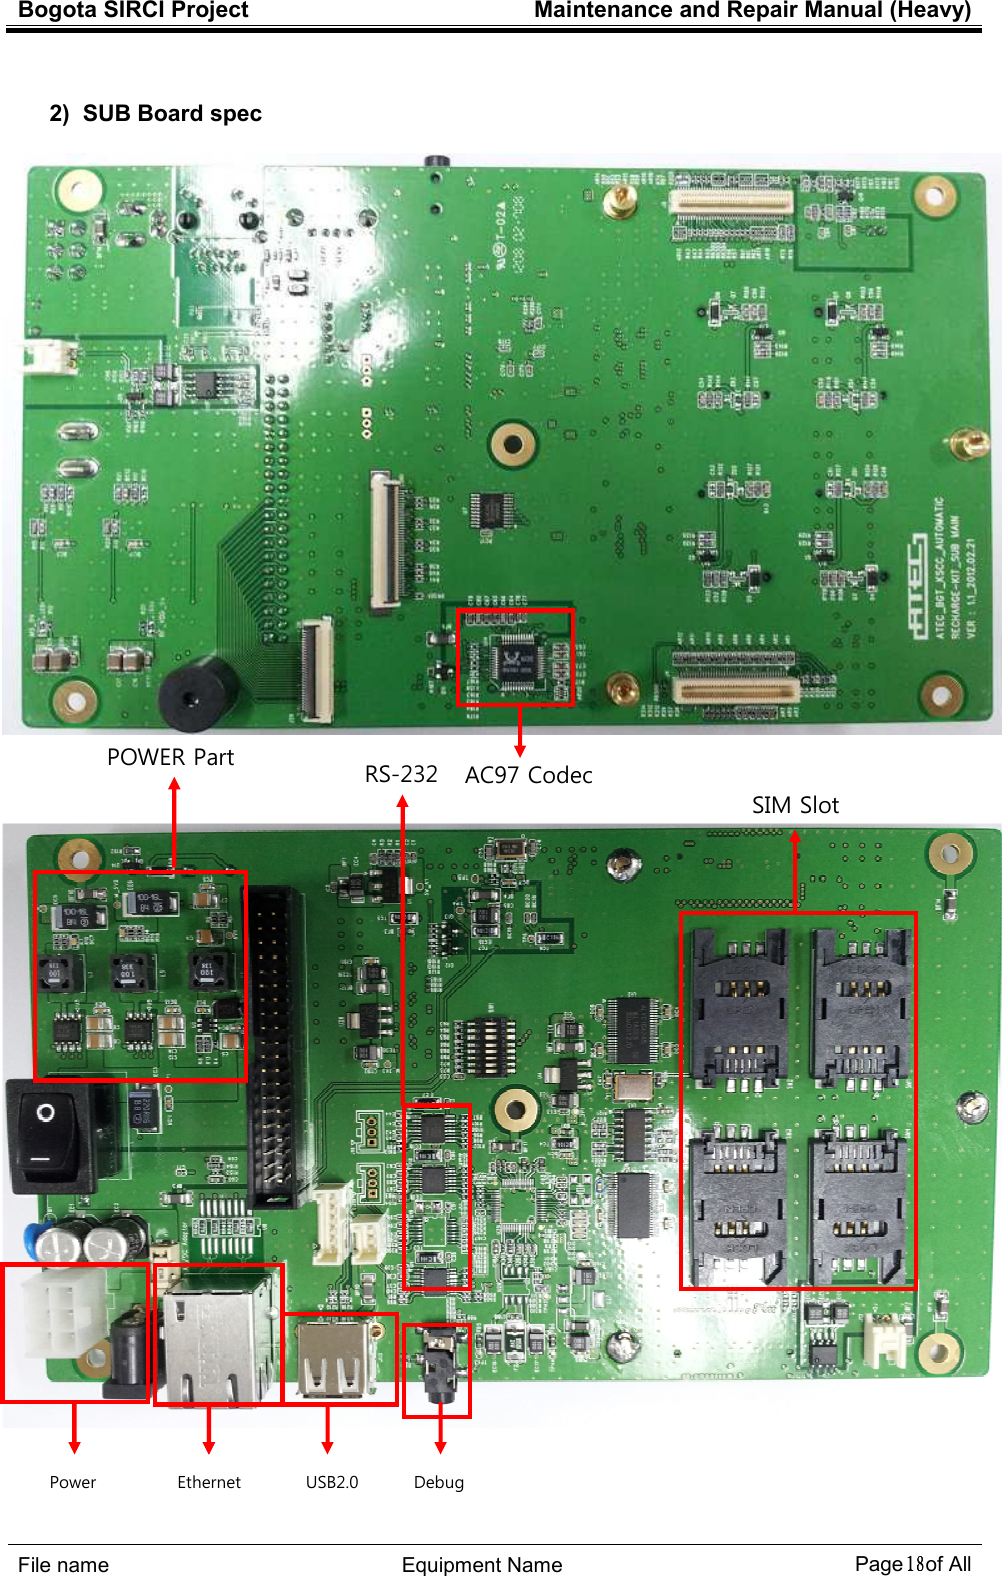 Bogota SIRCI Project  Maintenance and Repair Manual (Heavy)     １８１８１８１８ !  2)  SUB Board spec             SIM Slot                    AC97 Codec           RS-232           POWER Part Power  Debug USB2.0 Ethernet 